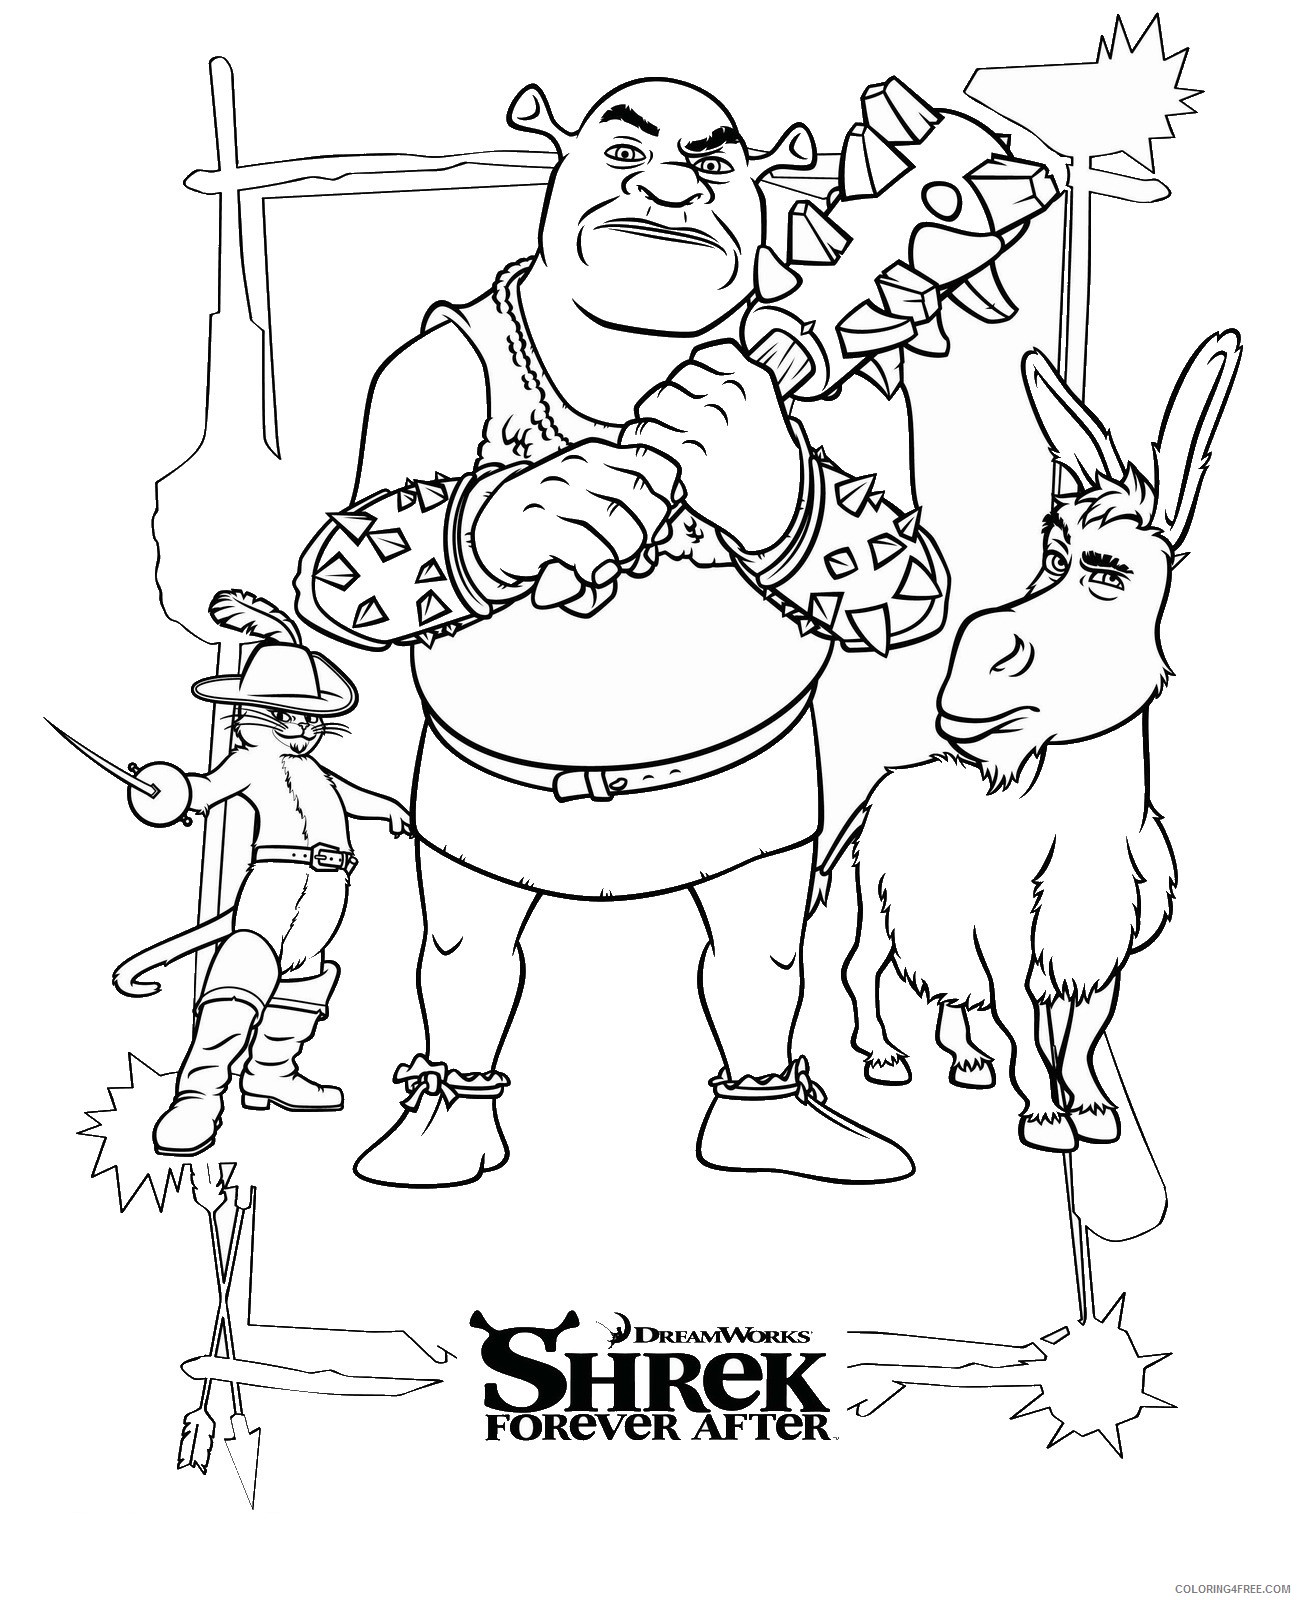 Shrek Coloring Pages Cartoons shrek_06 Printable 2020 5416 Coloring4free